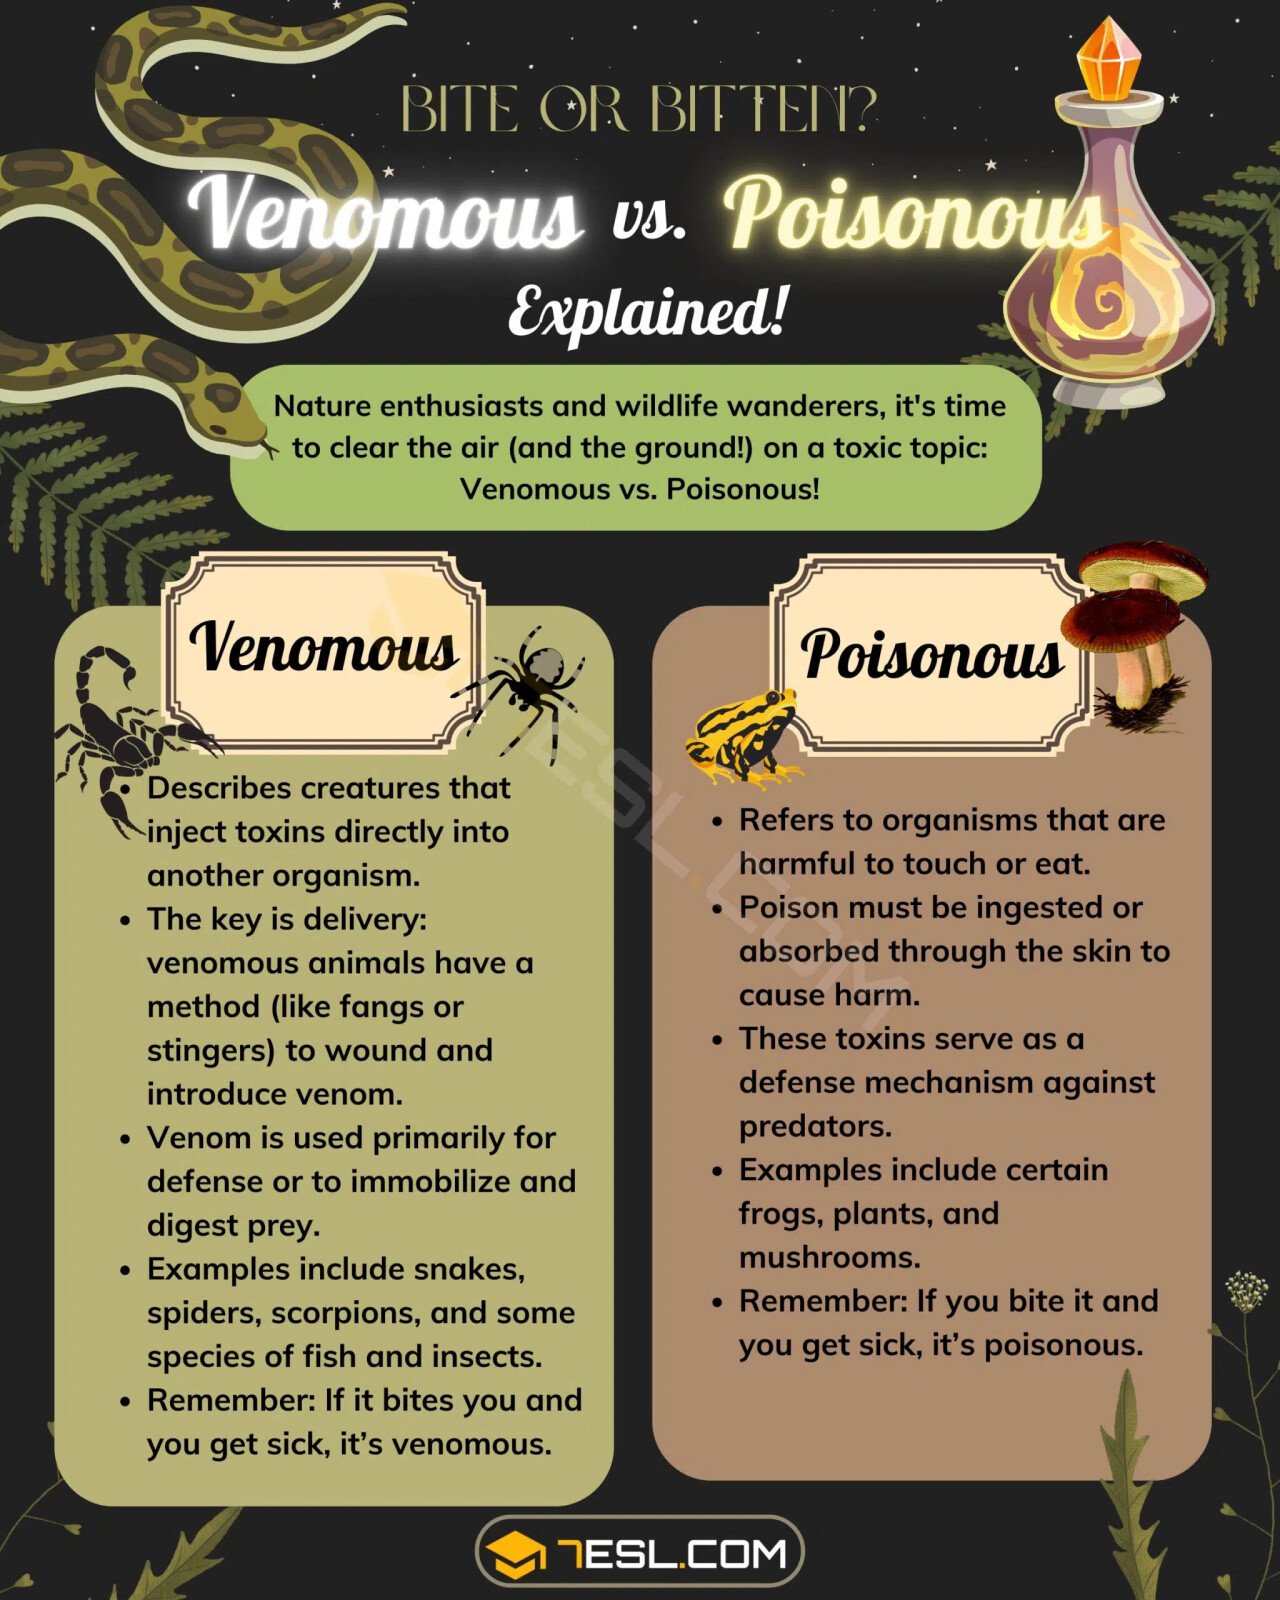 Venomous_vs._Poisonous-scaled.jpg.webp.ren.jpg 쉽게 보는 독의 세가지 종류와 차이